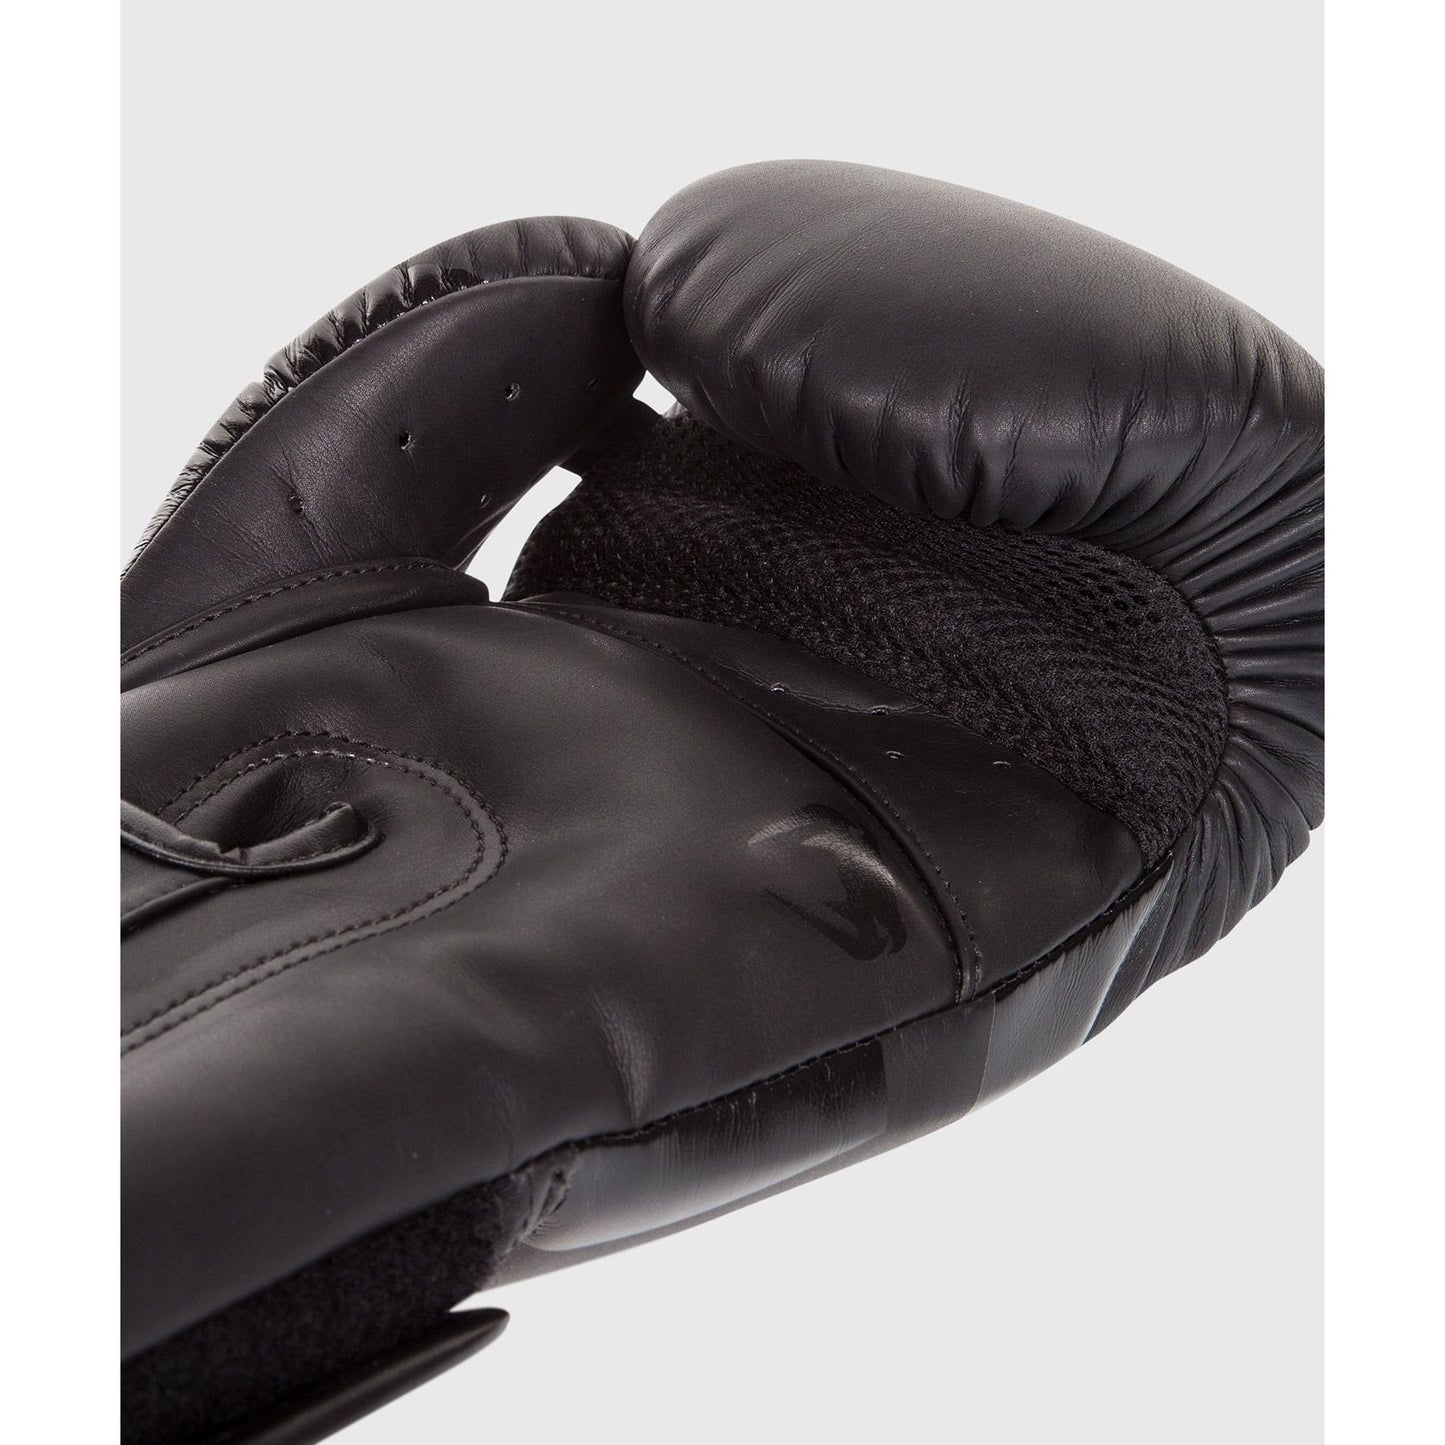 Venum Elite Boxing Gloves - Black/Black - Martial Arts Supplies Aus